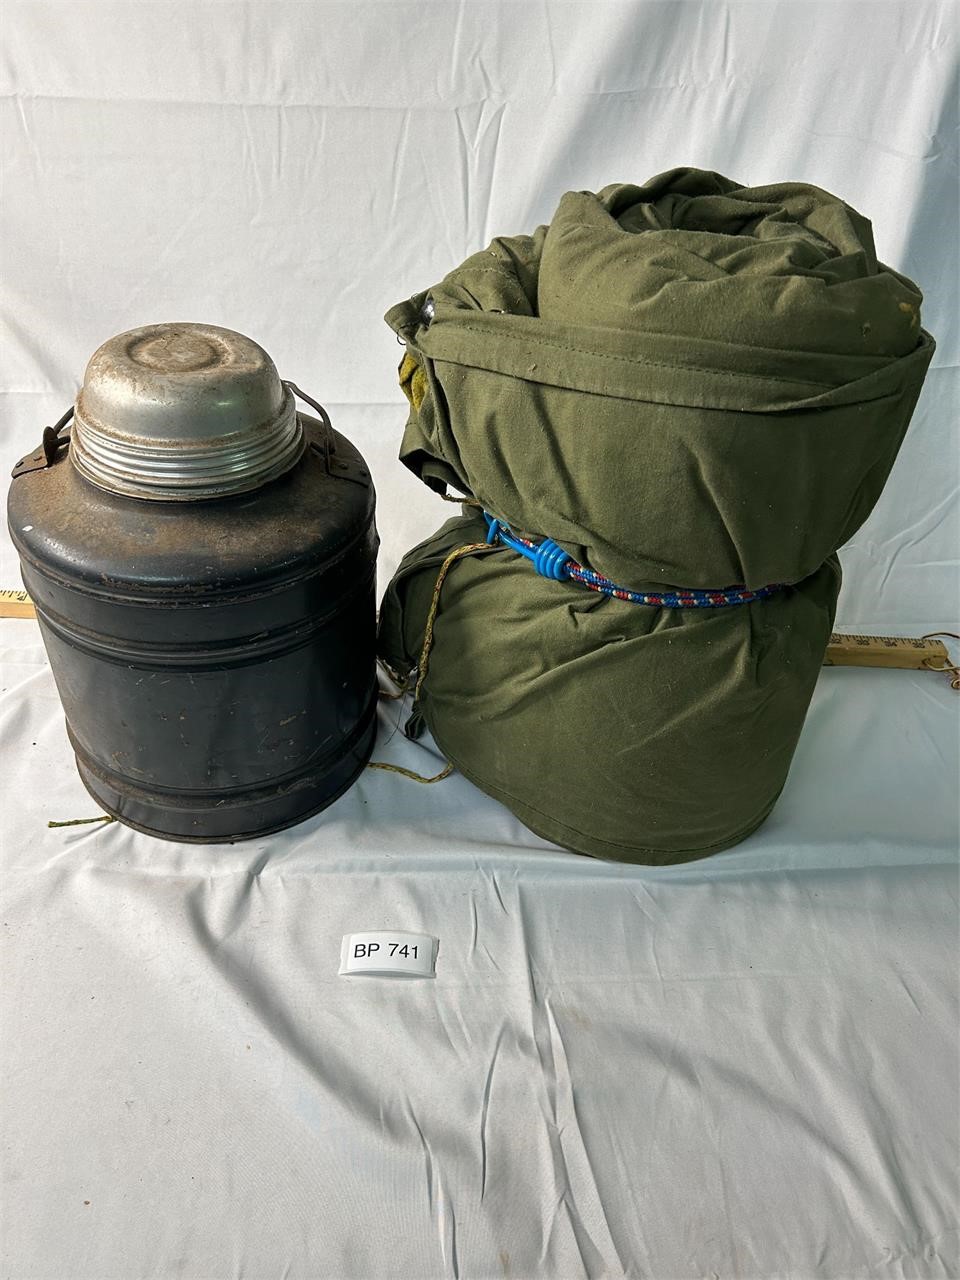 VTG Gallon Thermos & Military Sleeping Bag